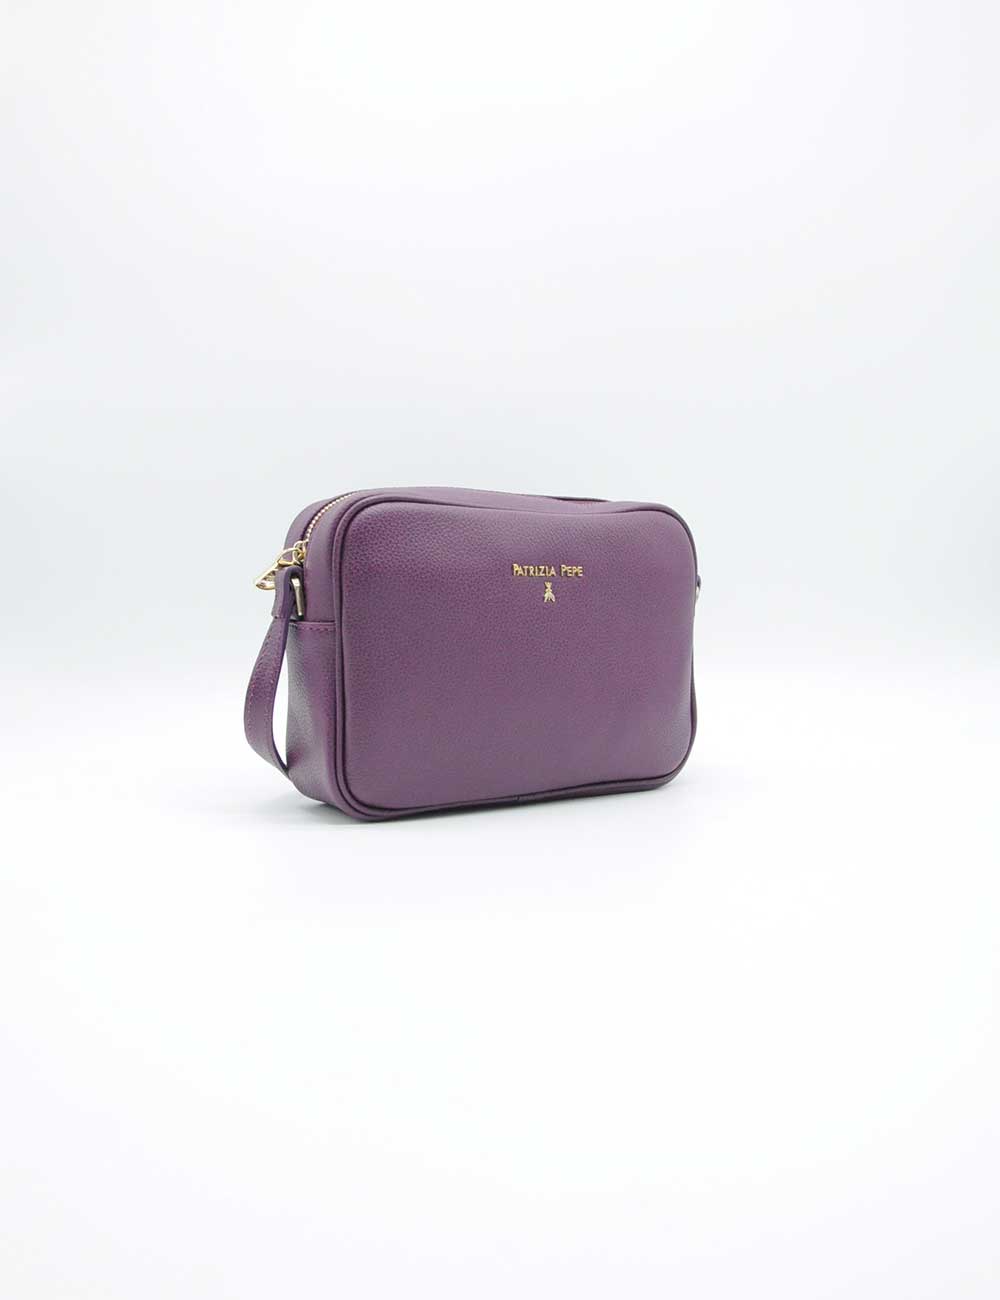 Patrizia Pepe Camera Bag Futuristic Purple